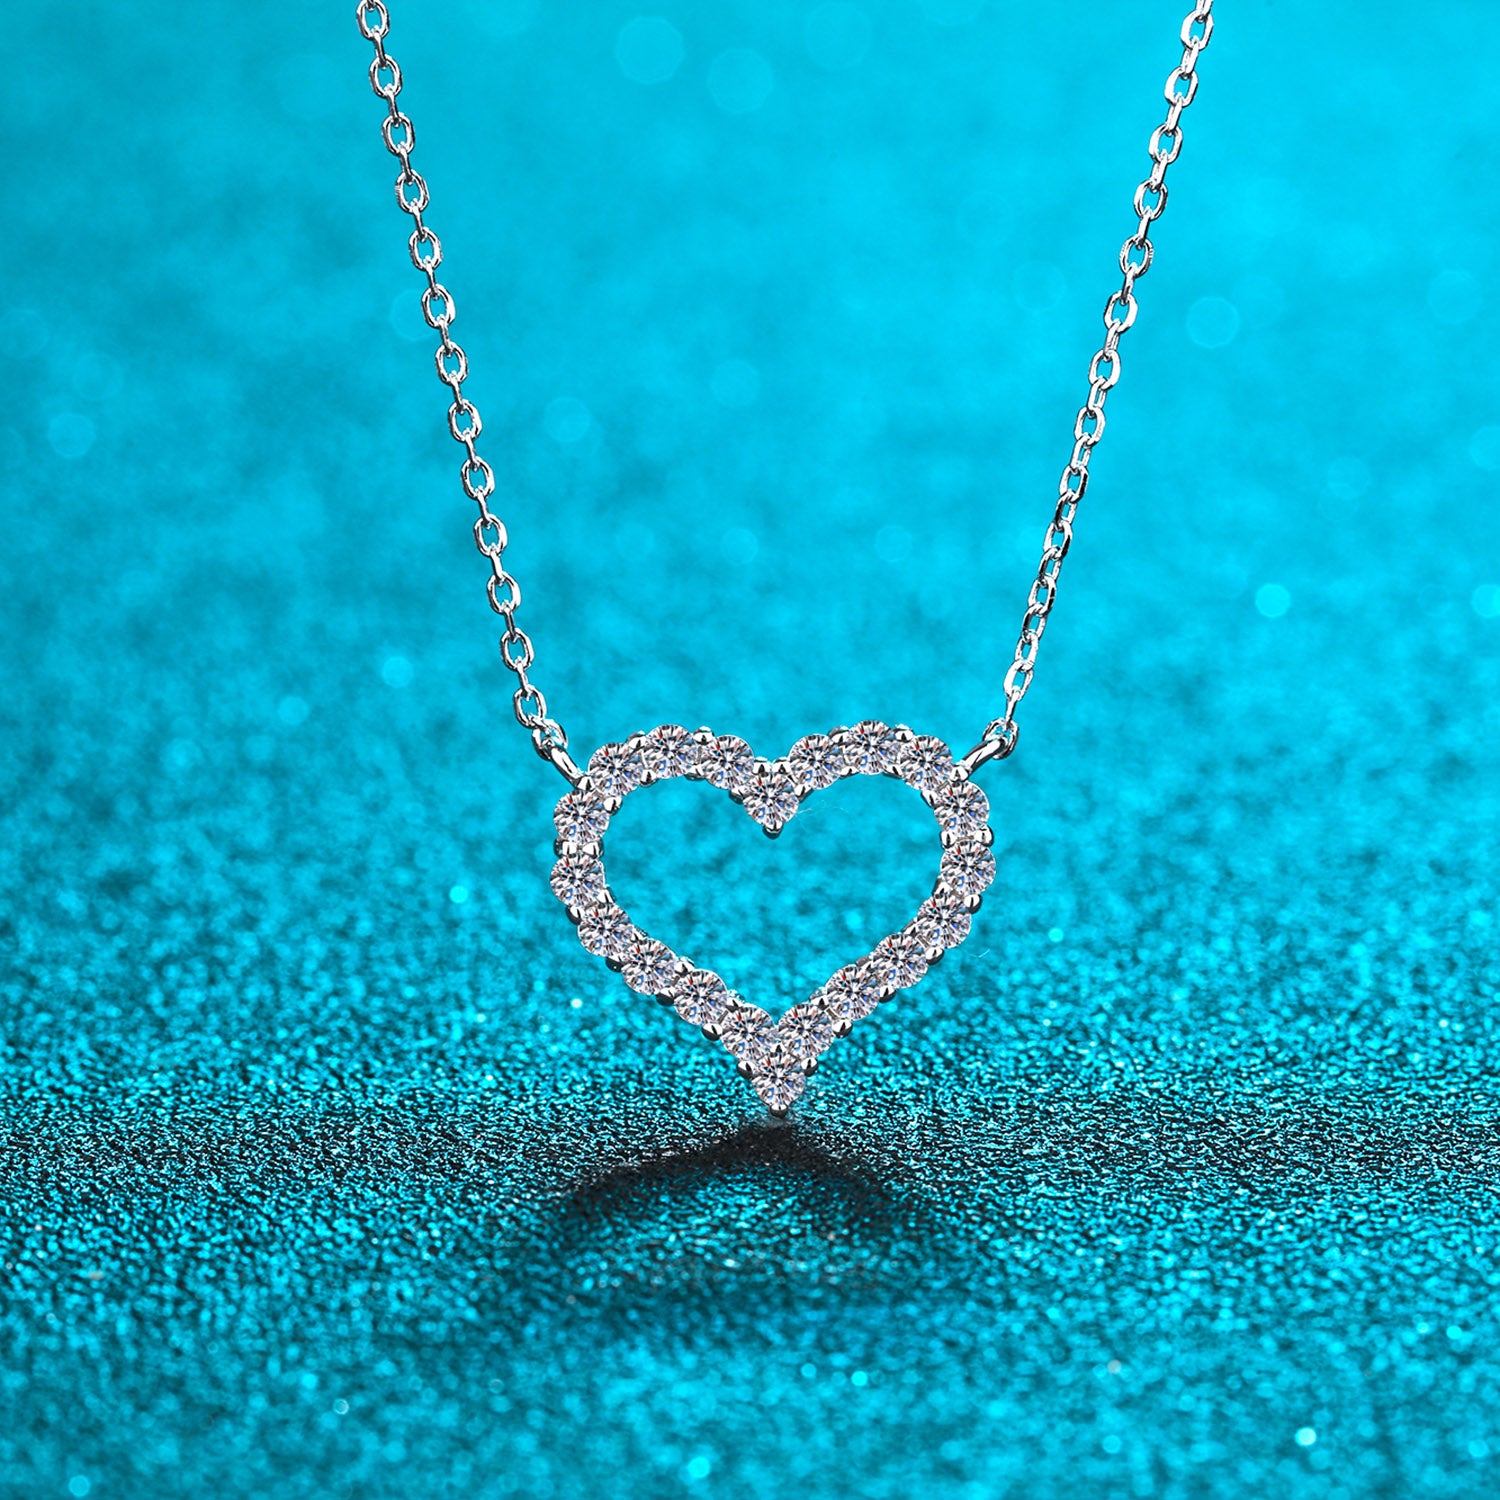 Moissanite 925 Sterling Silver Heart Shape Necklace - Sydney So Sweet